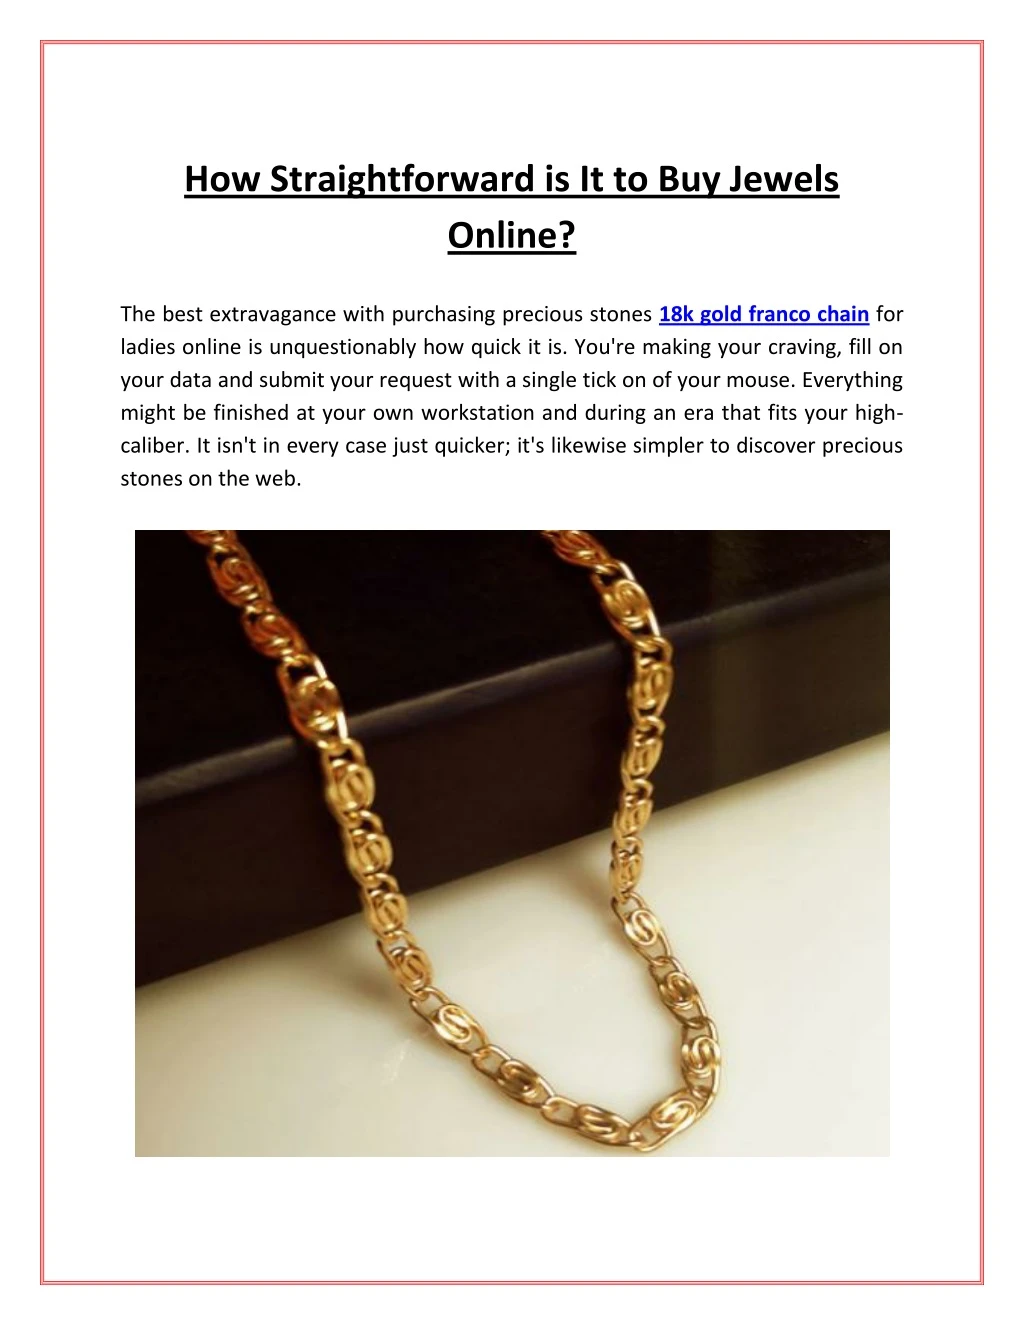 how straightforward is it to buy jewels online